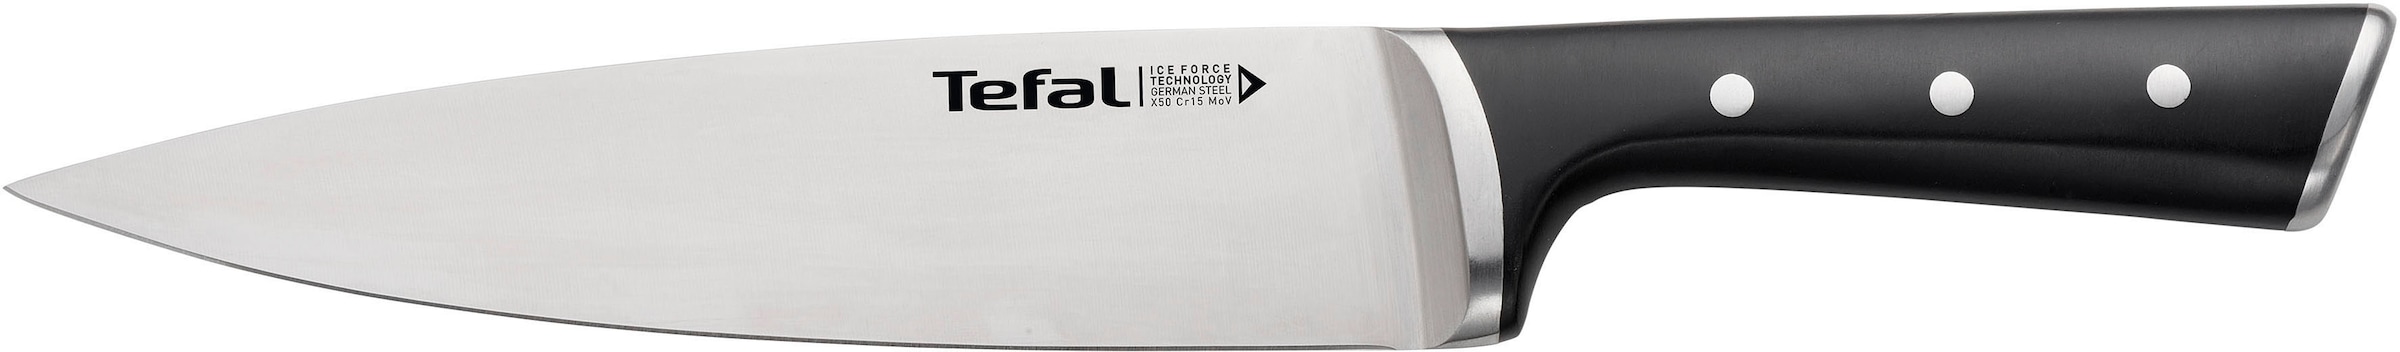 Tefal Pfannen-Set »Duetto+ Ice Force«, Edelstahl 18/10, (Set, je 1 Bratpfanne Ø 20/24/28 cm, 1 Kochmesser 20 cm), Edelstahl in Premium Qualität, Thermo-Signal, inkl. Kochmesser